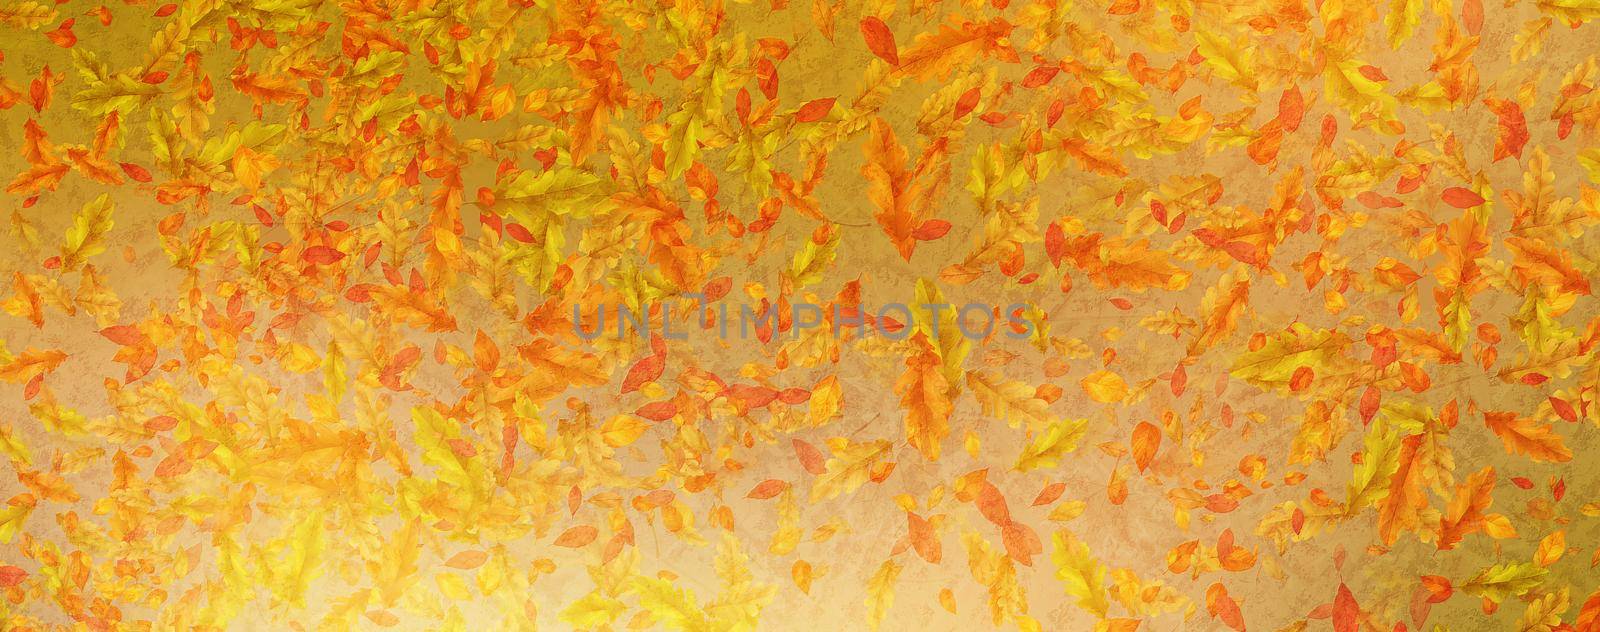 Vintage Autumn Yellow Orange Background by yay_lmrb